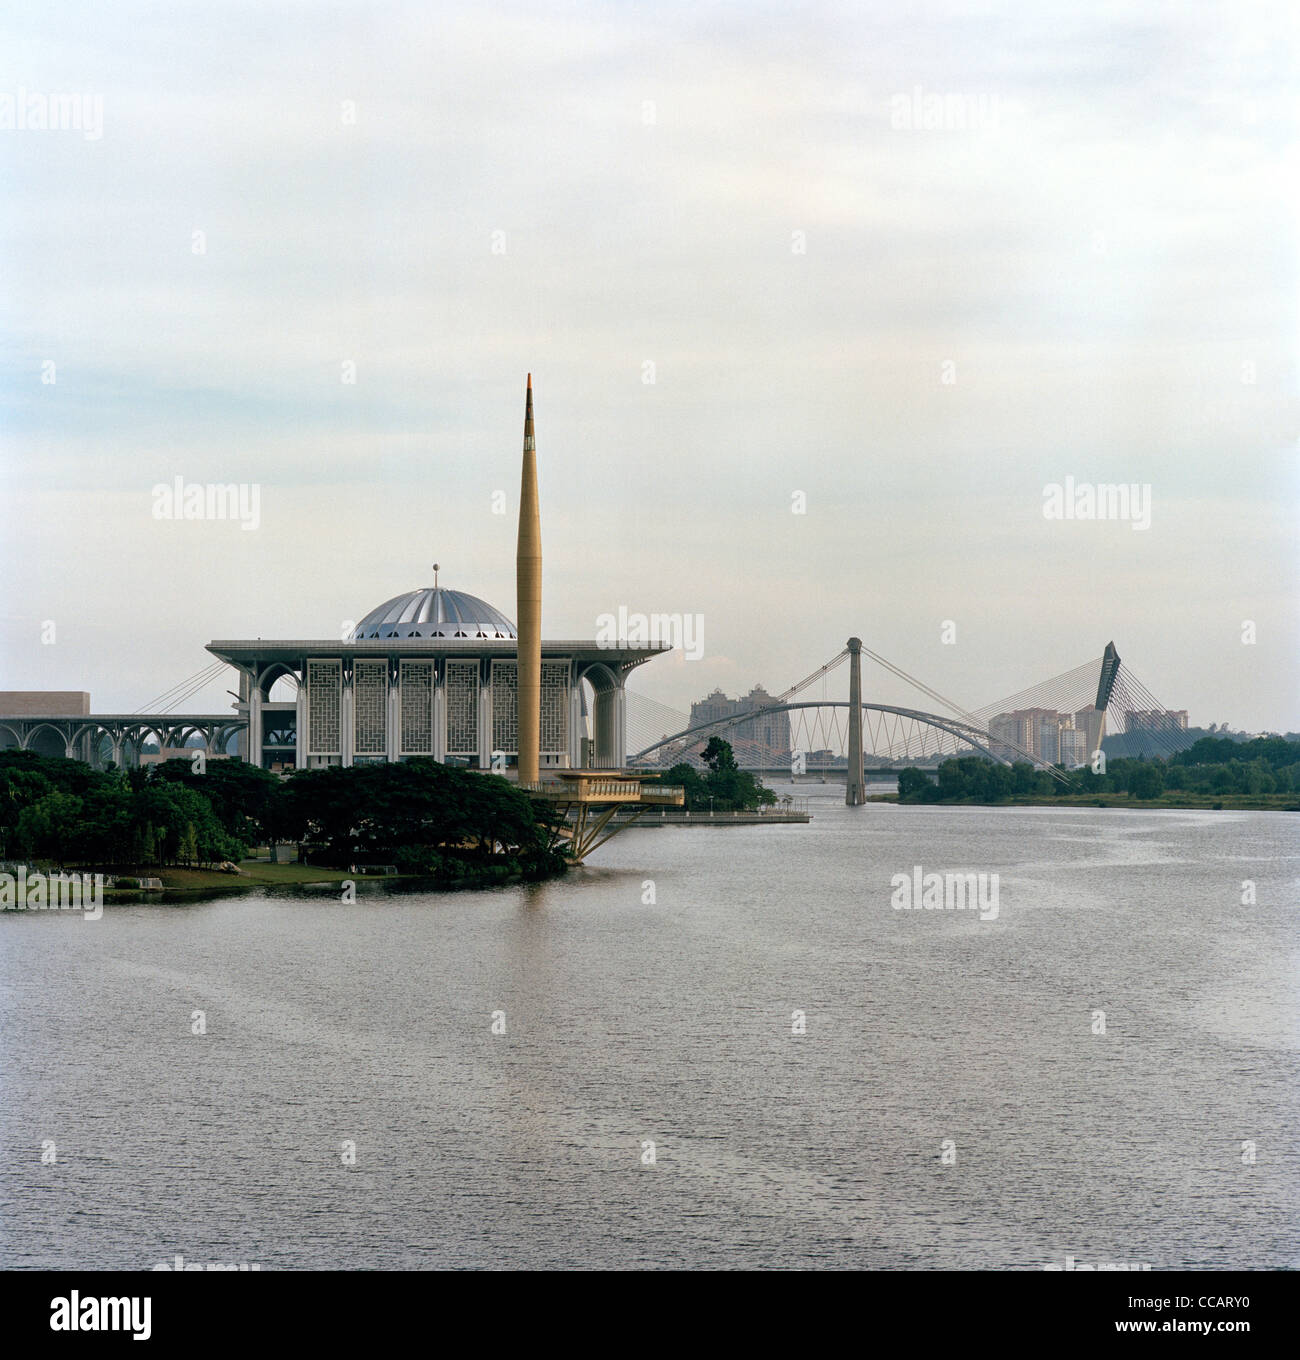 Reisen Fotografie - Bügeleisen Moschee in Putrajaya in Kuala Lumpur in Malaysia Naher Osten Asien. Architektur Stockfoto